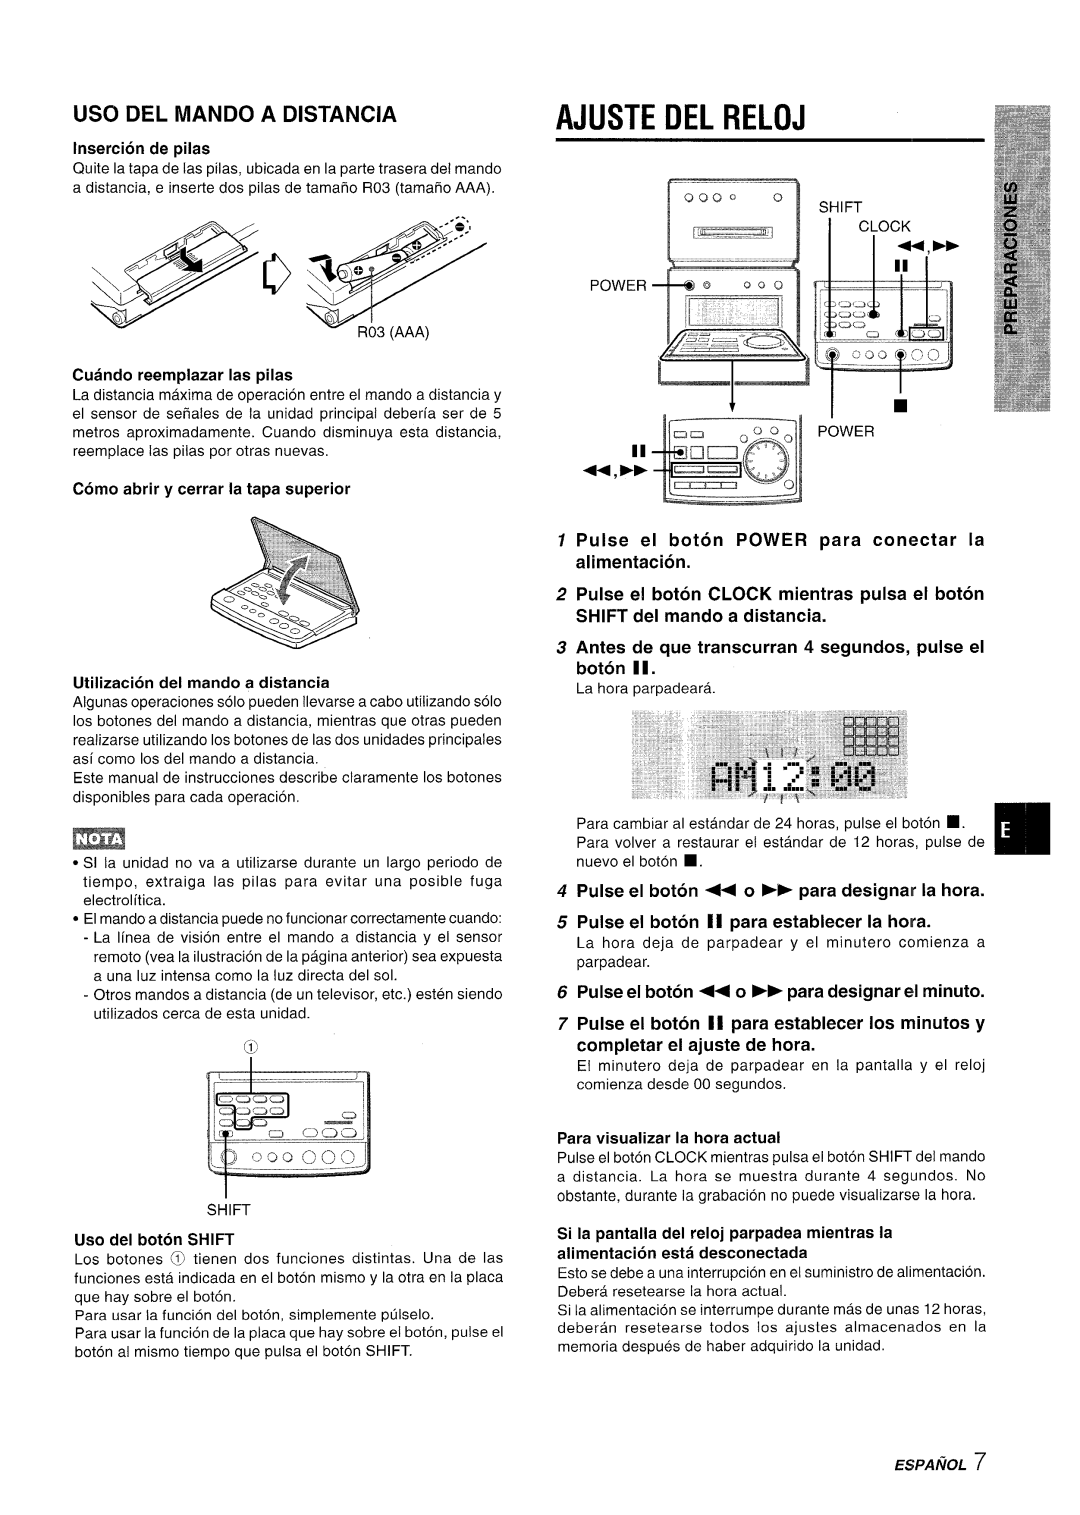 Aiwa XR-MD95 4!!!/’, Usi Del Mando A Distanciaajuste Del Reloj, Utilization del mando a distancia, Insertion de pilas 